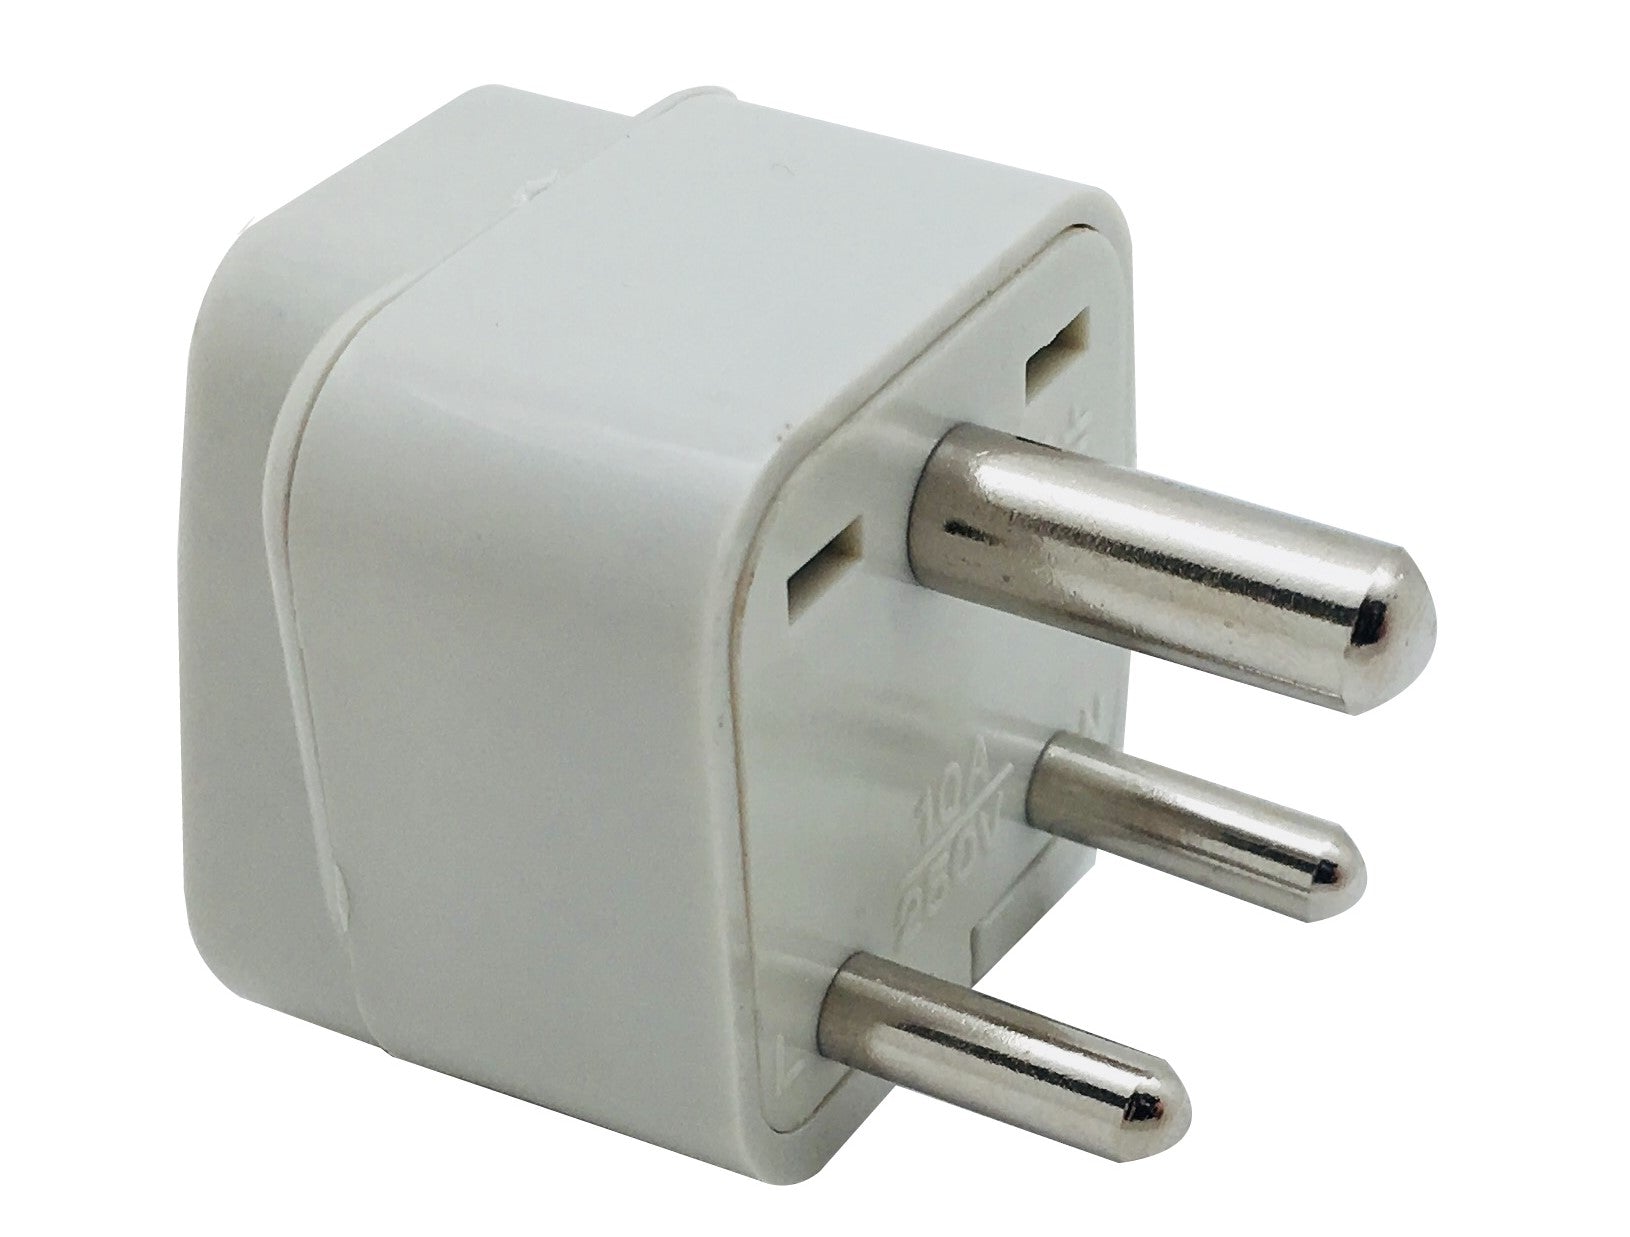 42-0301 Universal Power Plug Adapter: Round pins with ground